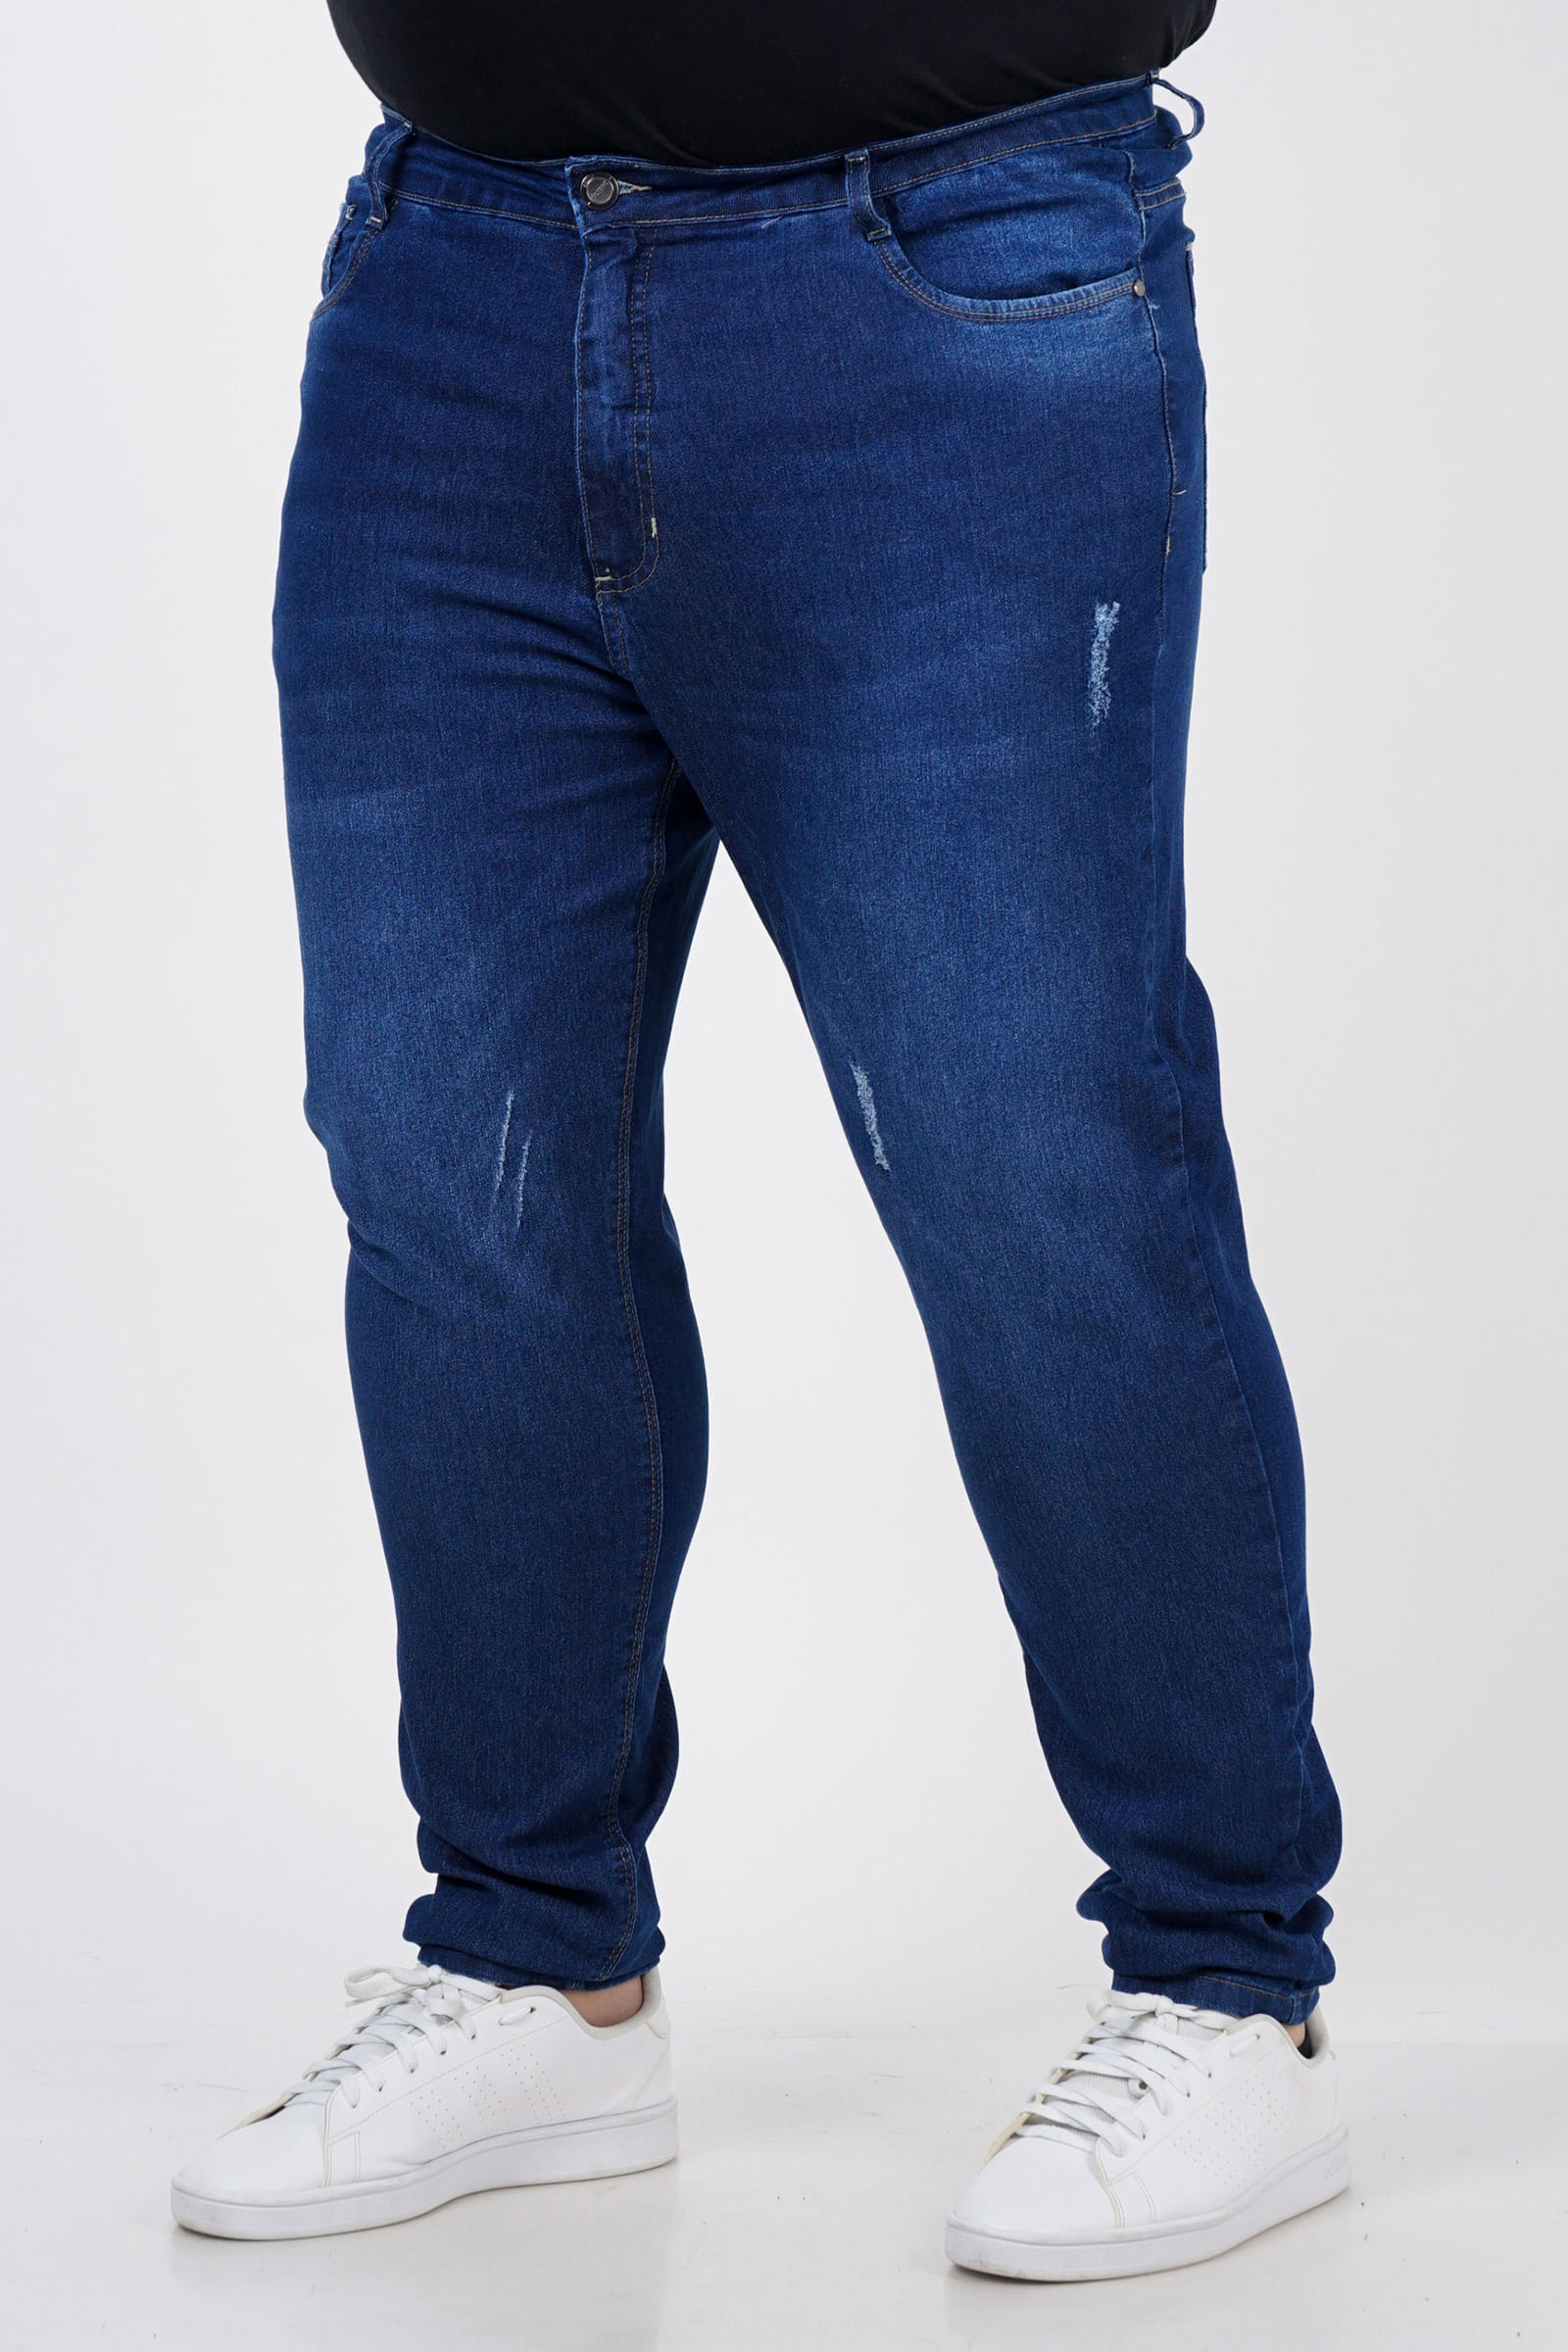 Calca-jeans-skinny-com-puidos-plus-size_0102_1